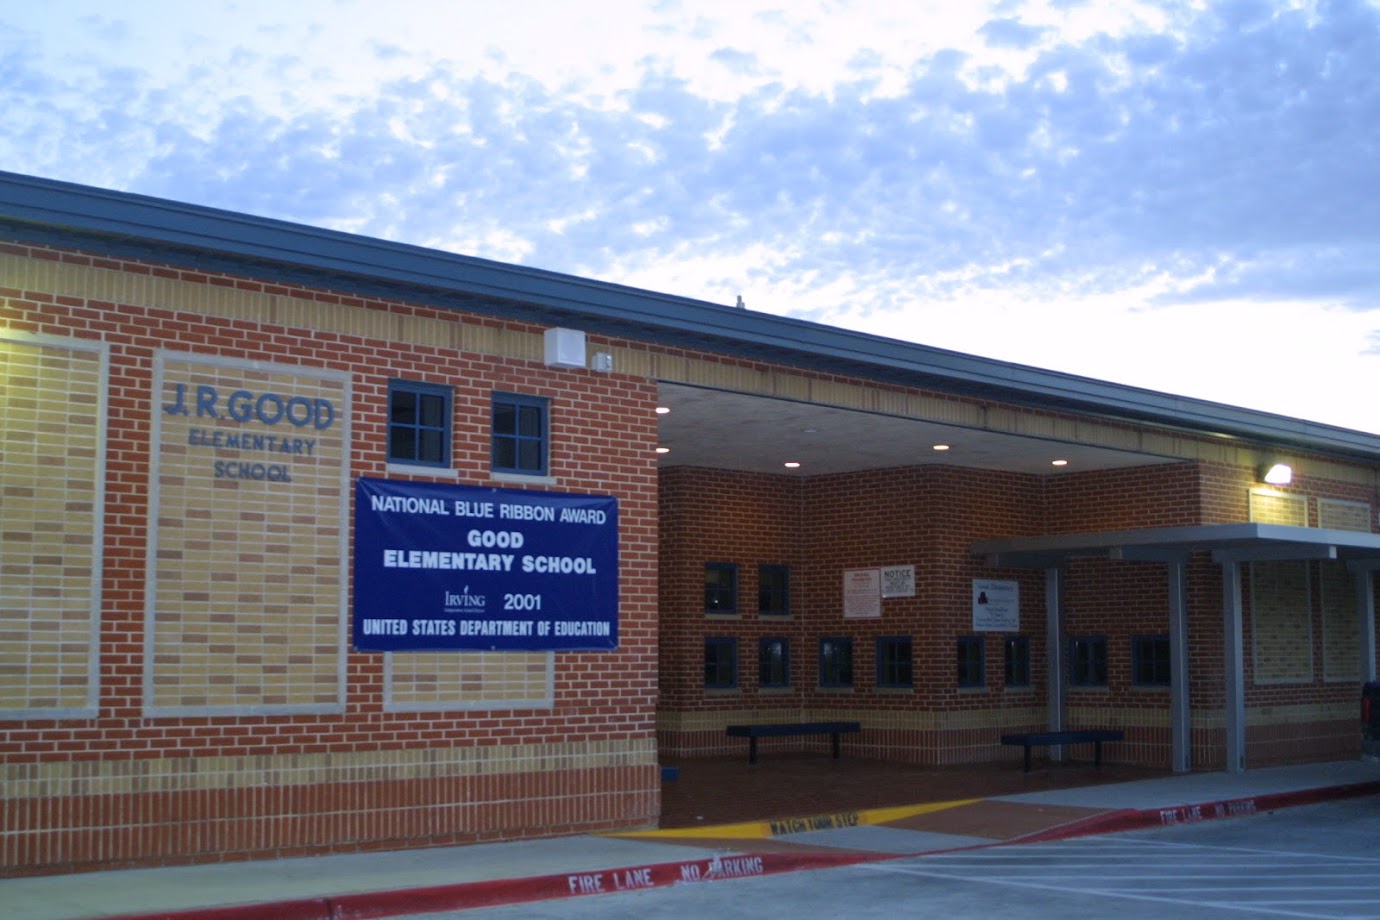 John R. Good Elementary School